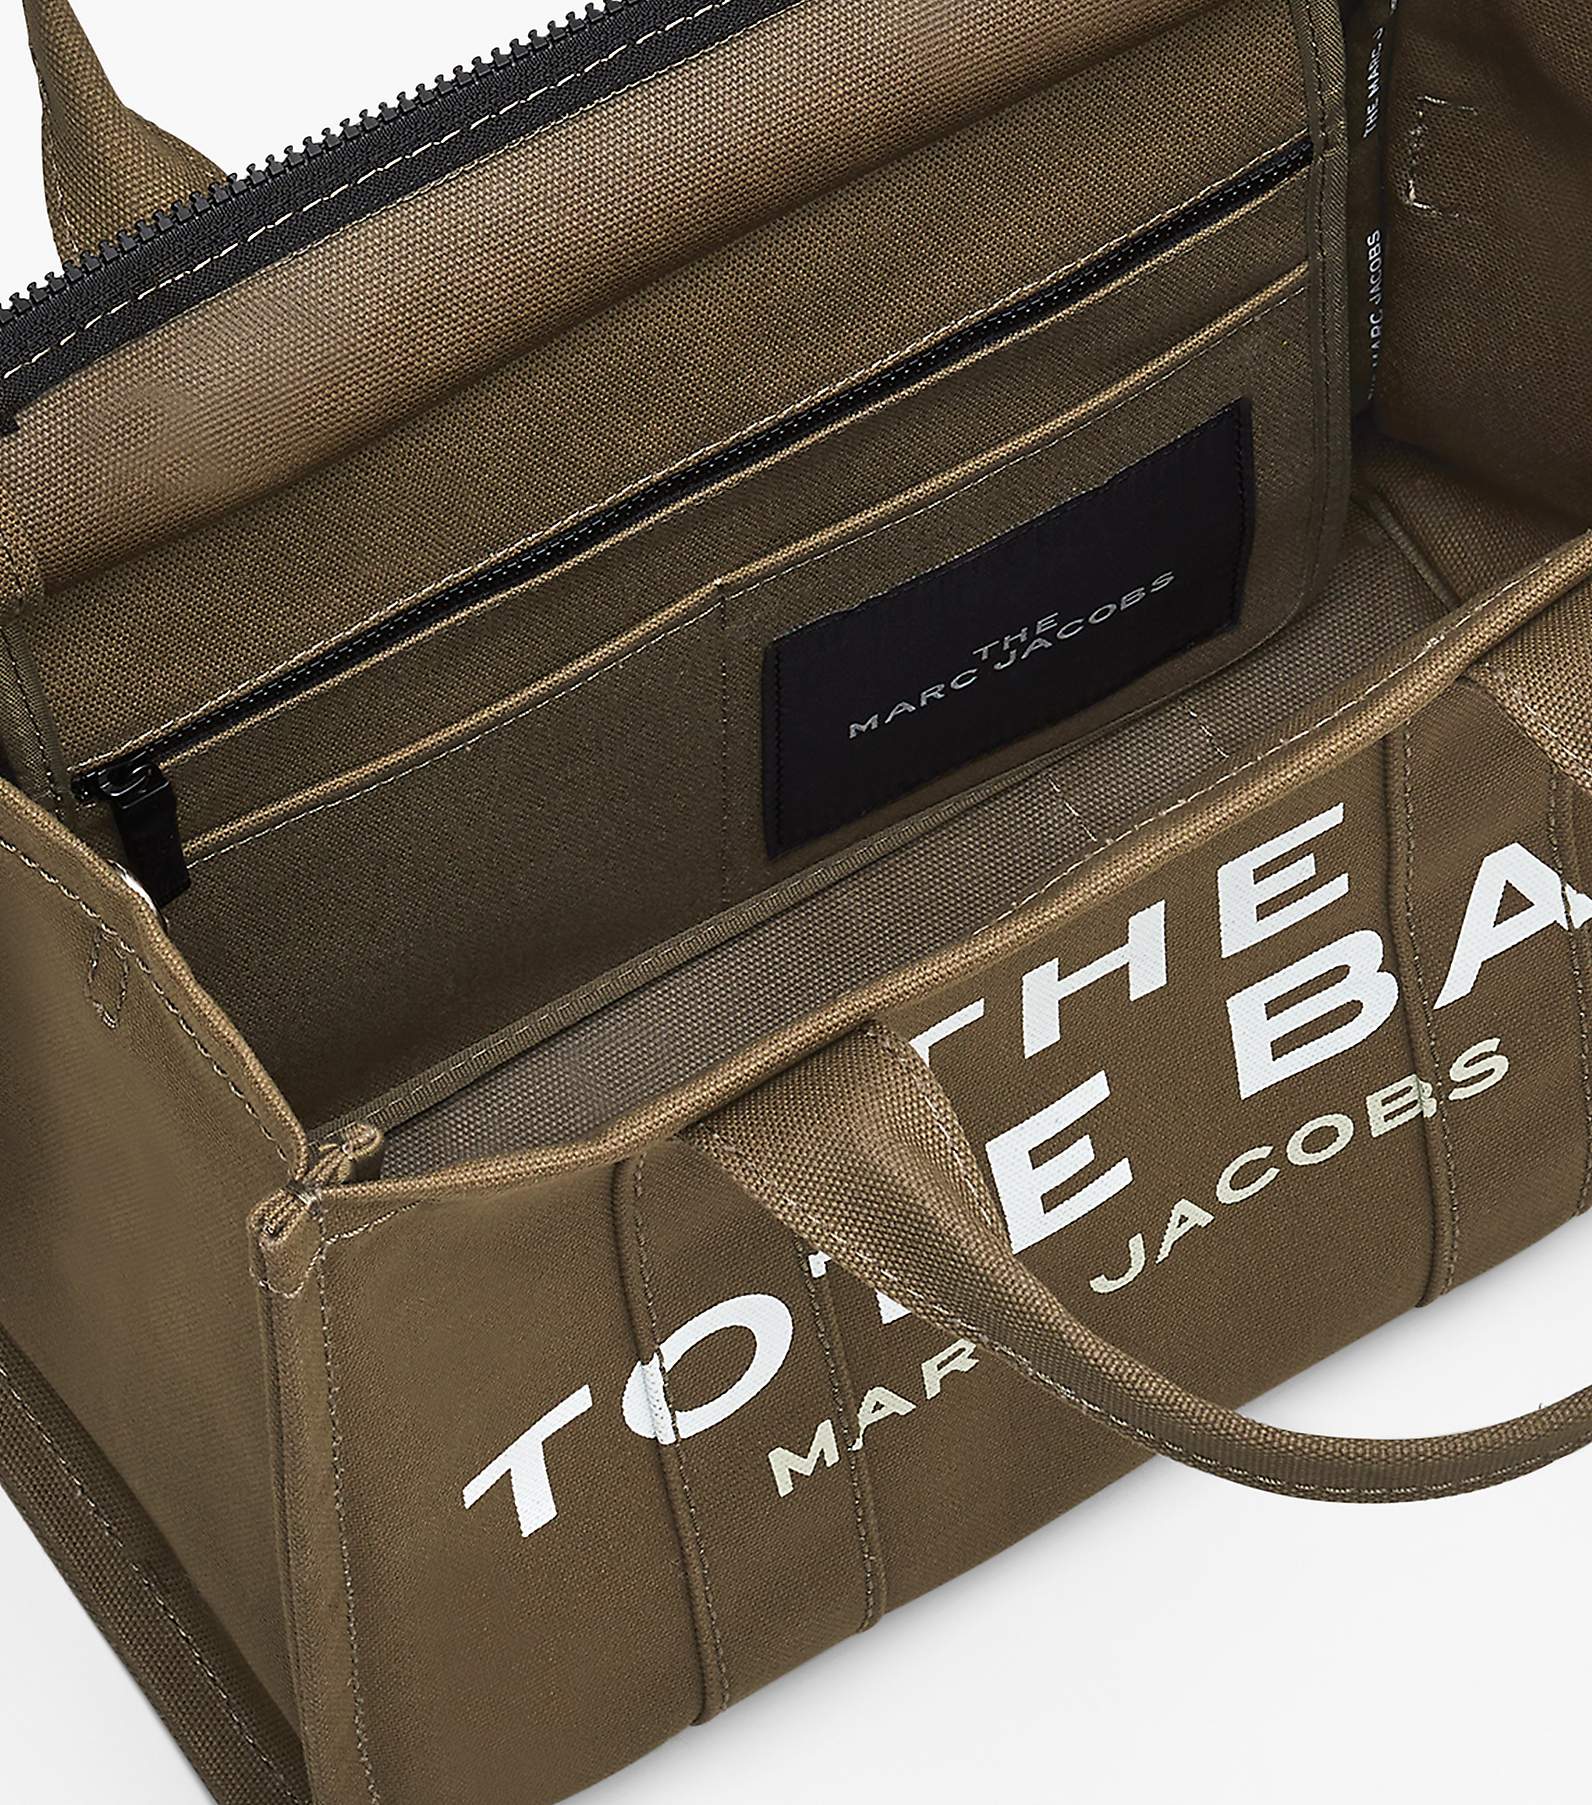 Marc Jacobs Beige The Mini Tote Bag